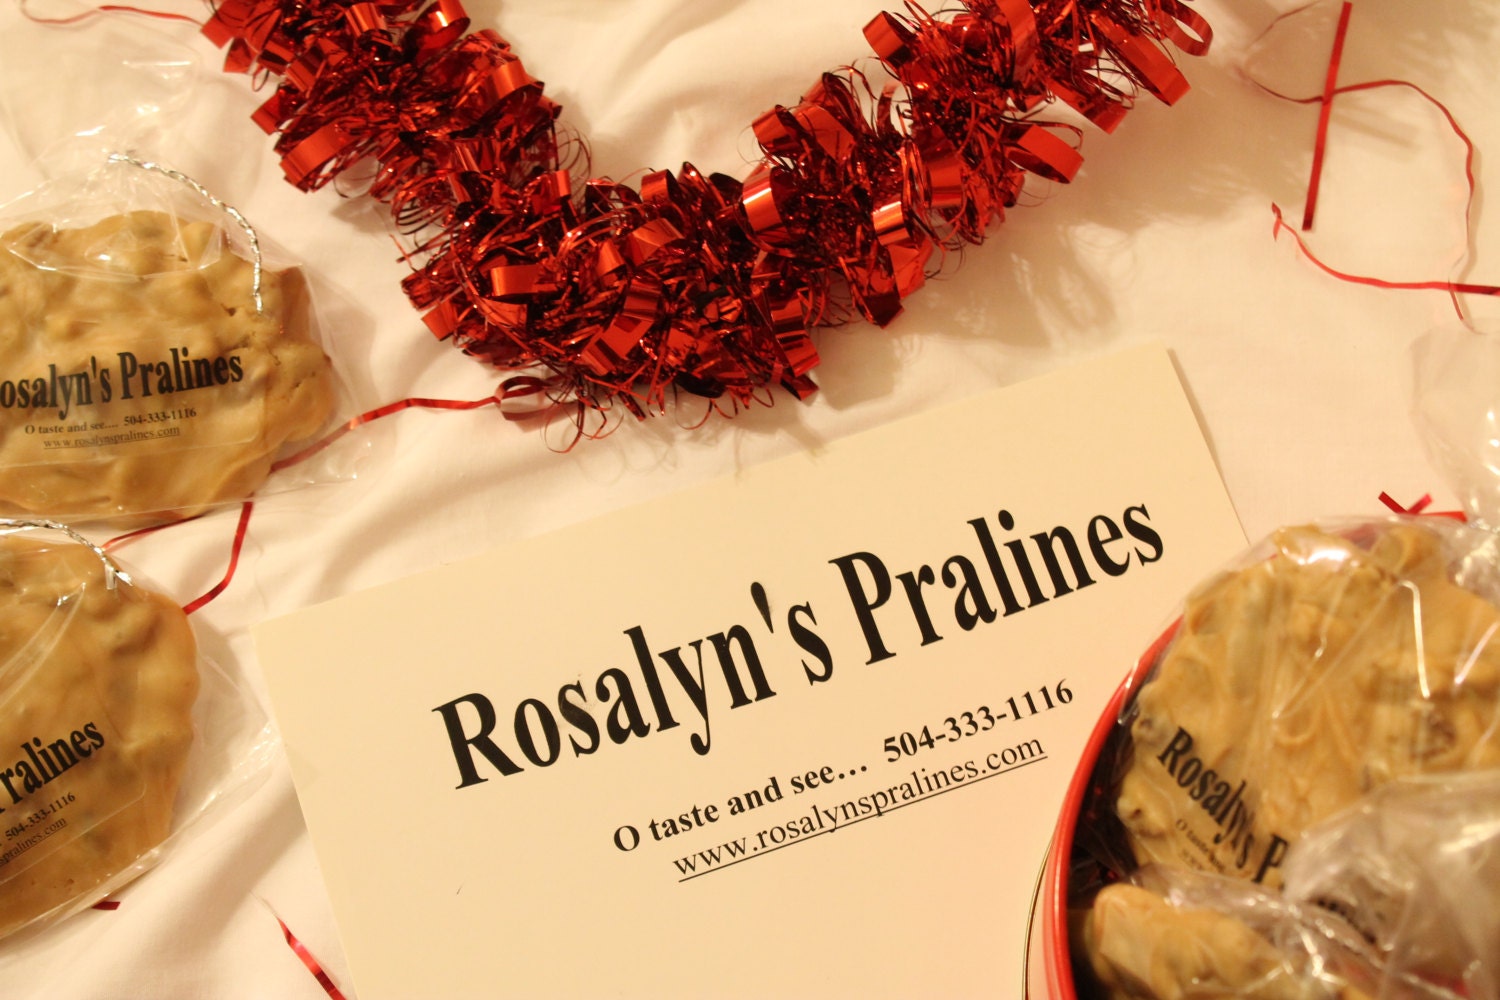 Rosalyn's Pralines